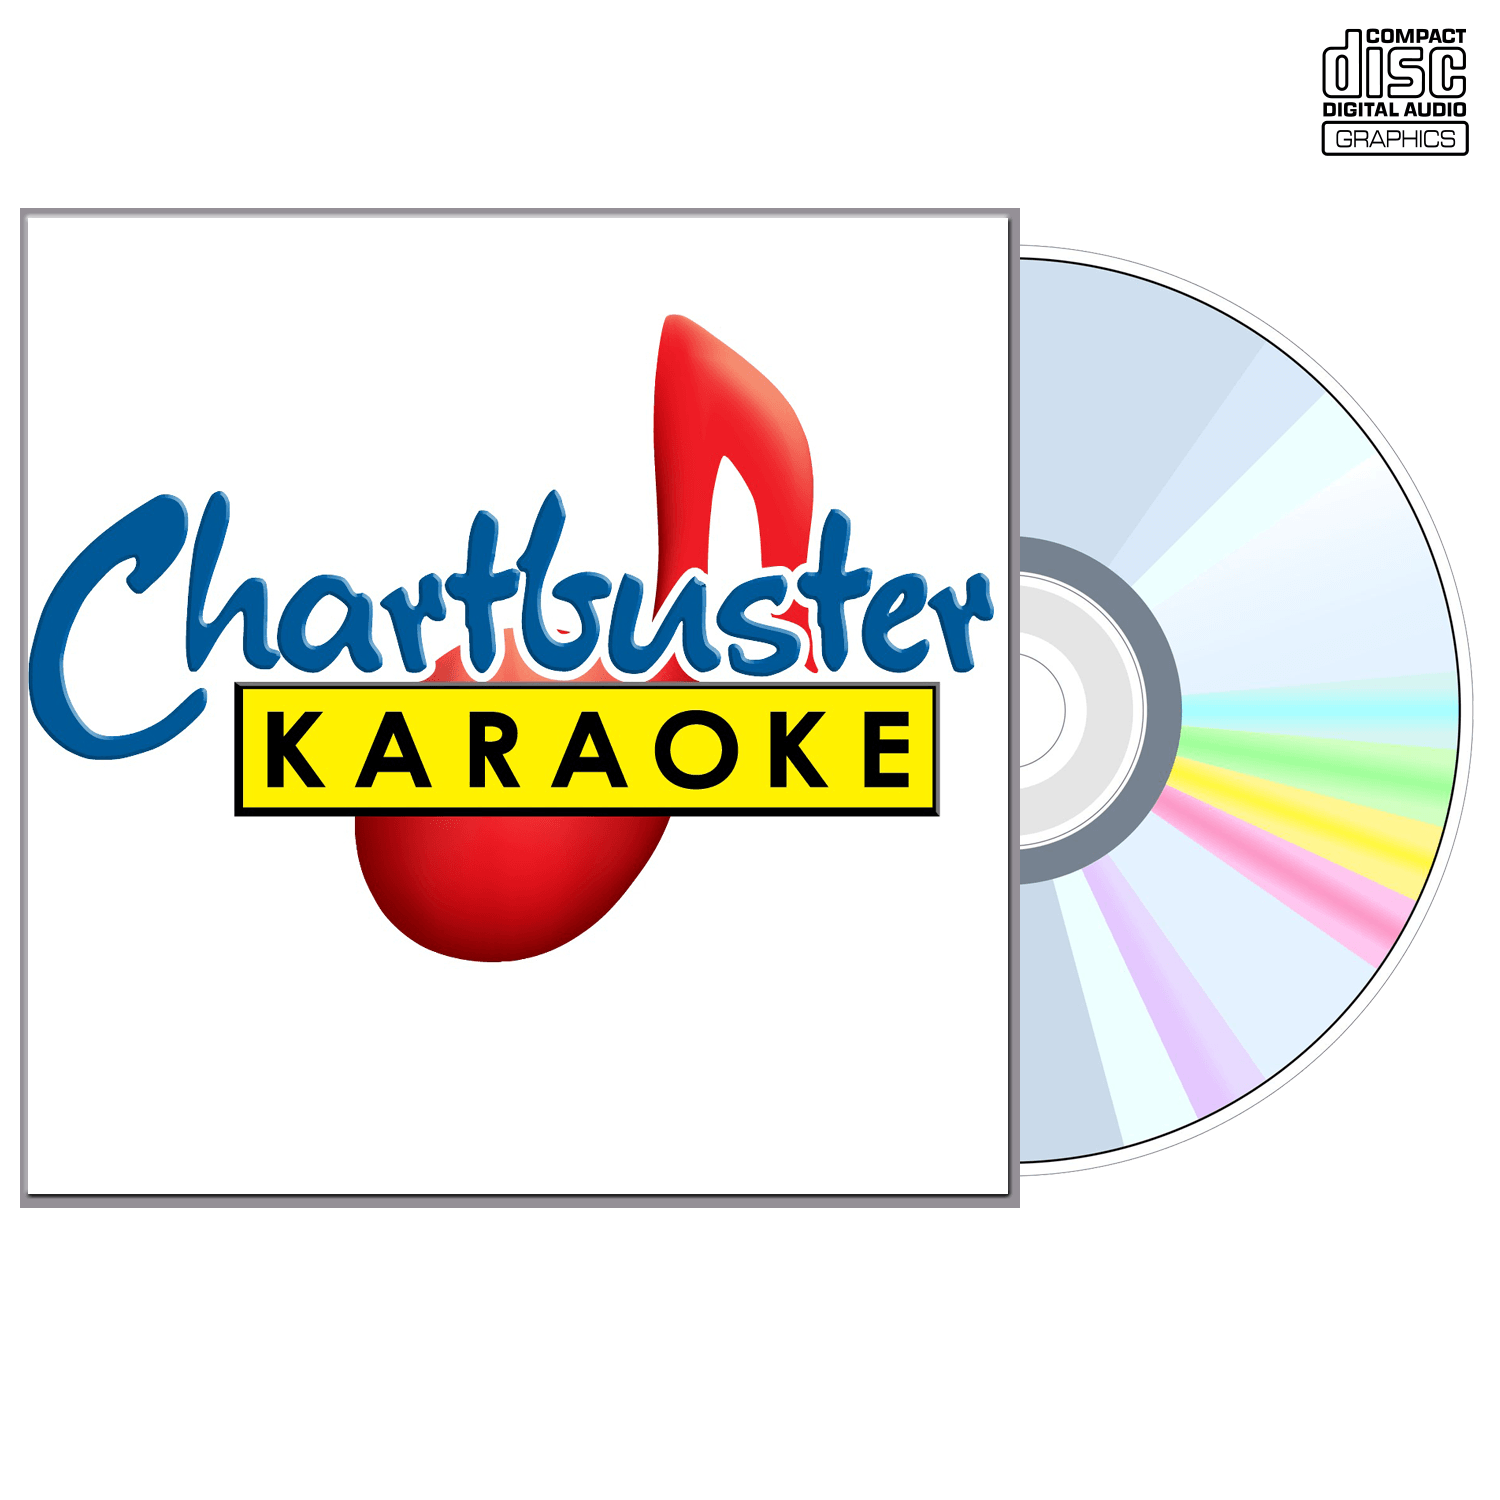 Ronnie Milsap Vol 2 - CD+G - Chartbuster Karaoke - Karaoke Home Entertainment